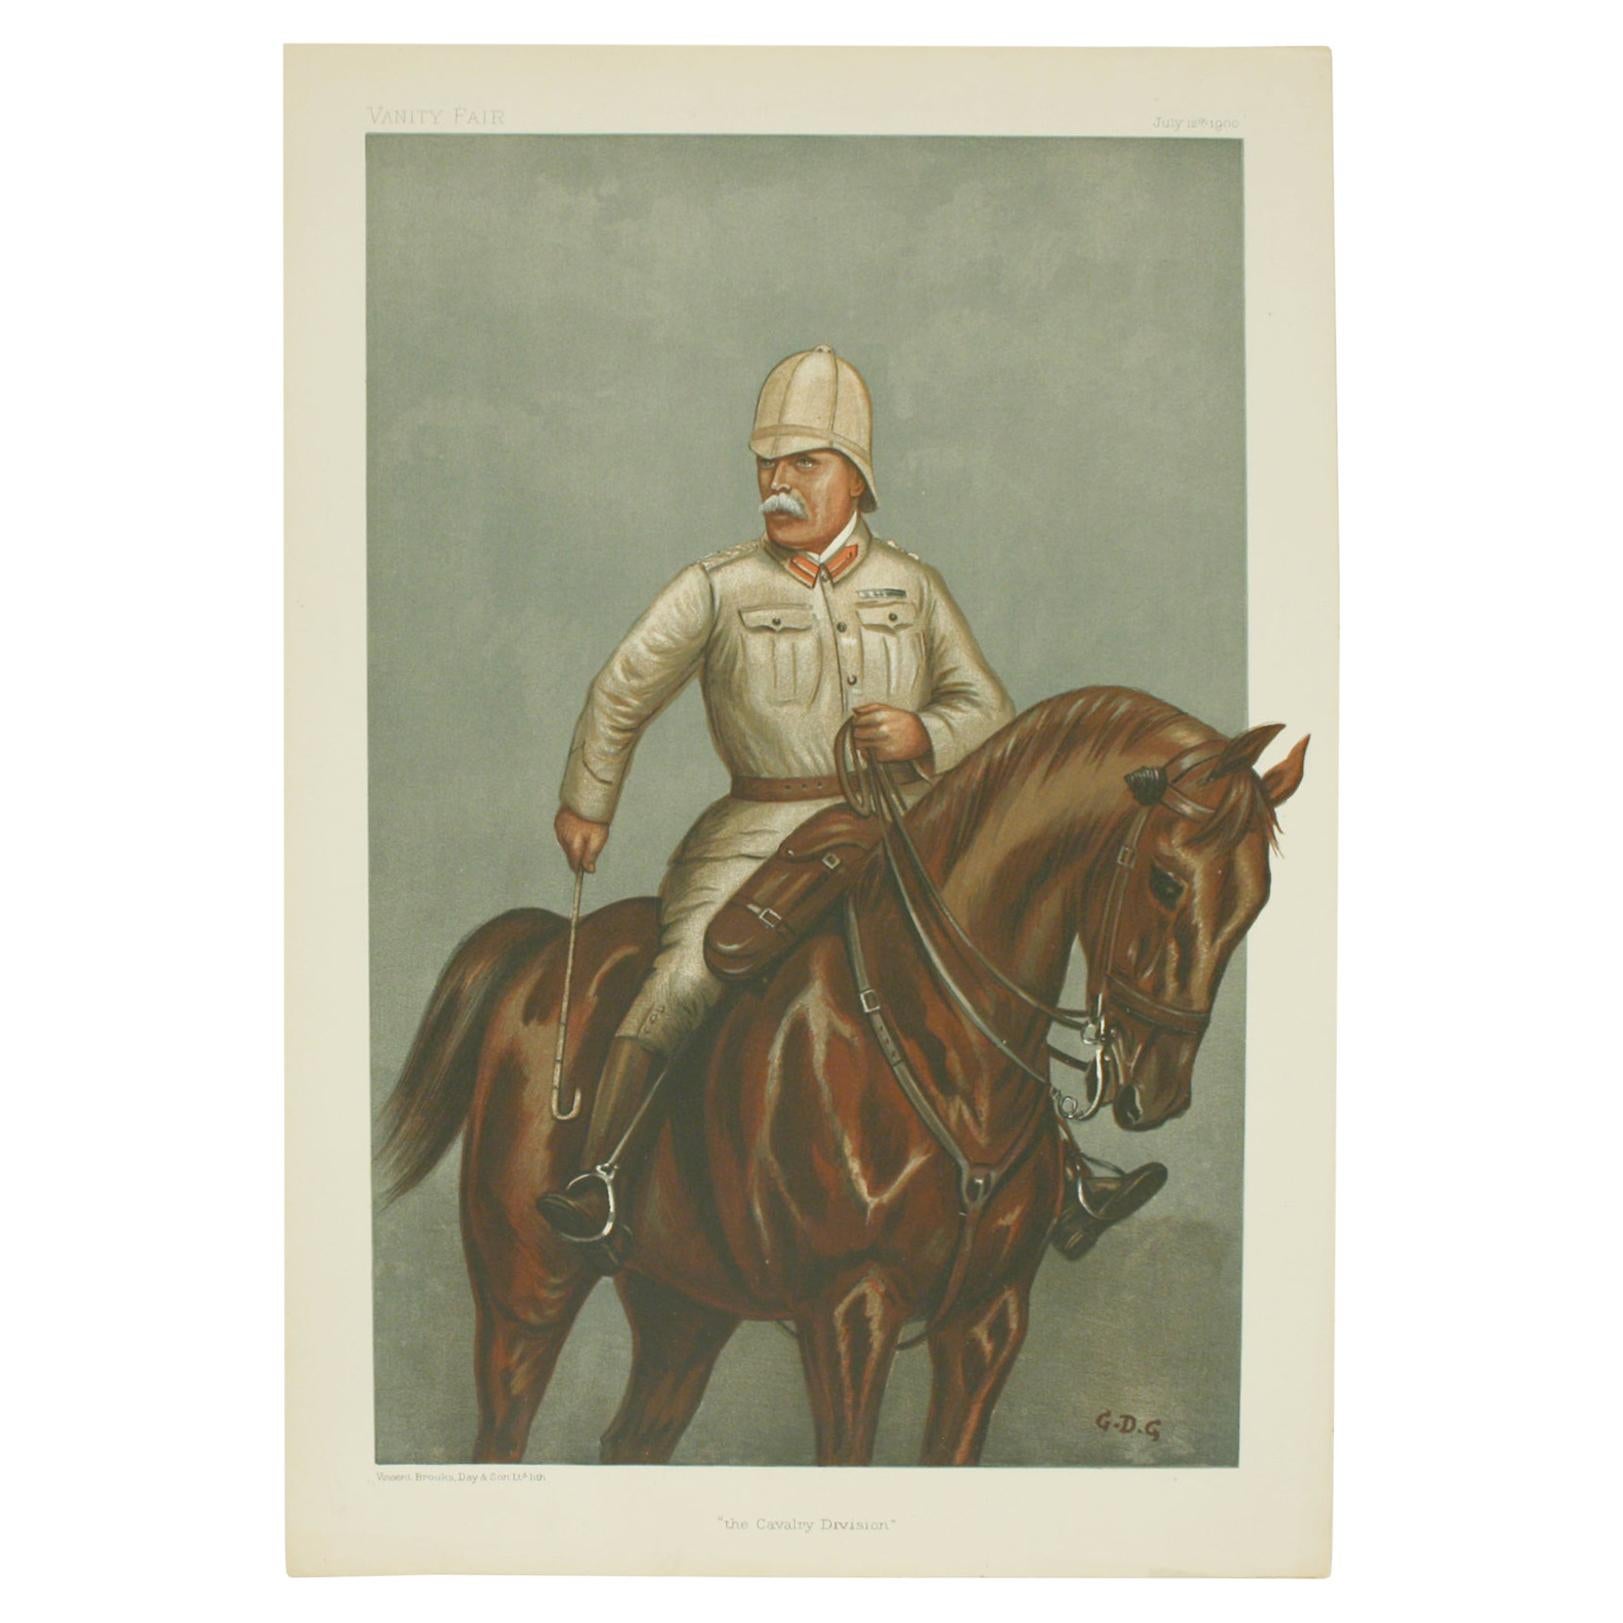 Vanity Fair, Military Print, the Cavalry Division